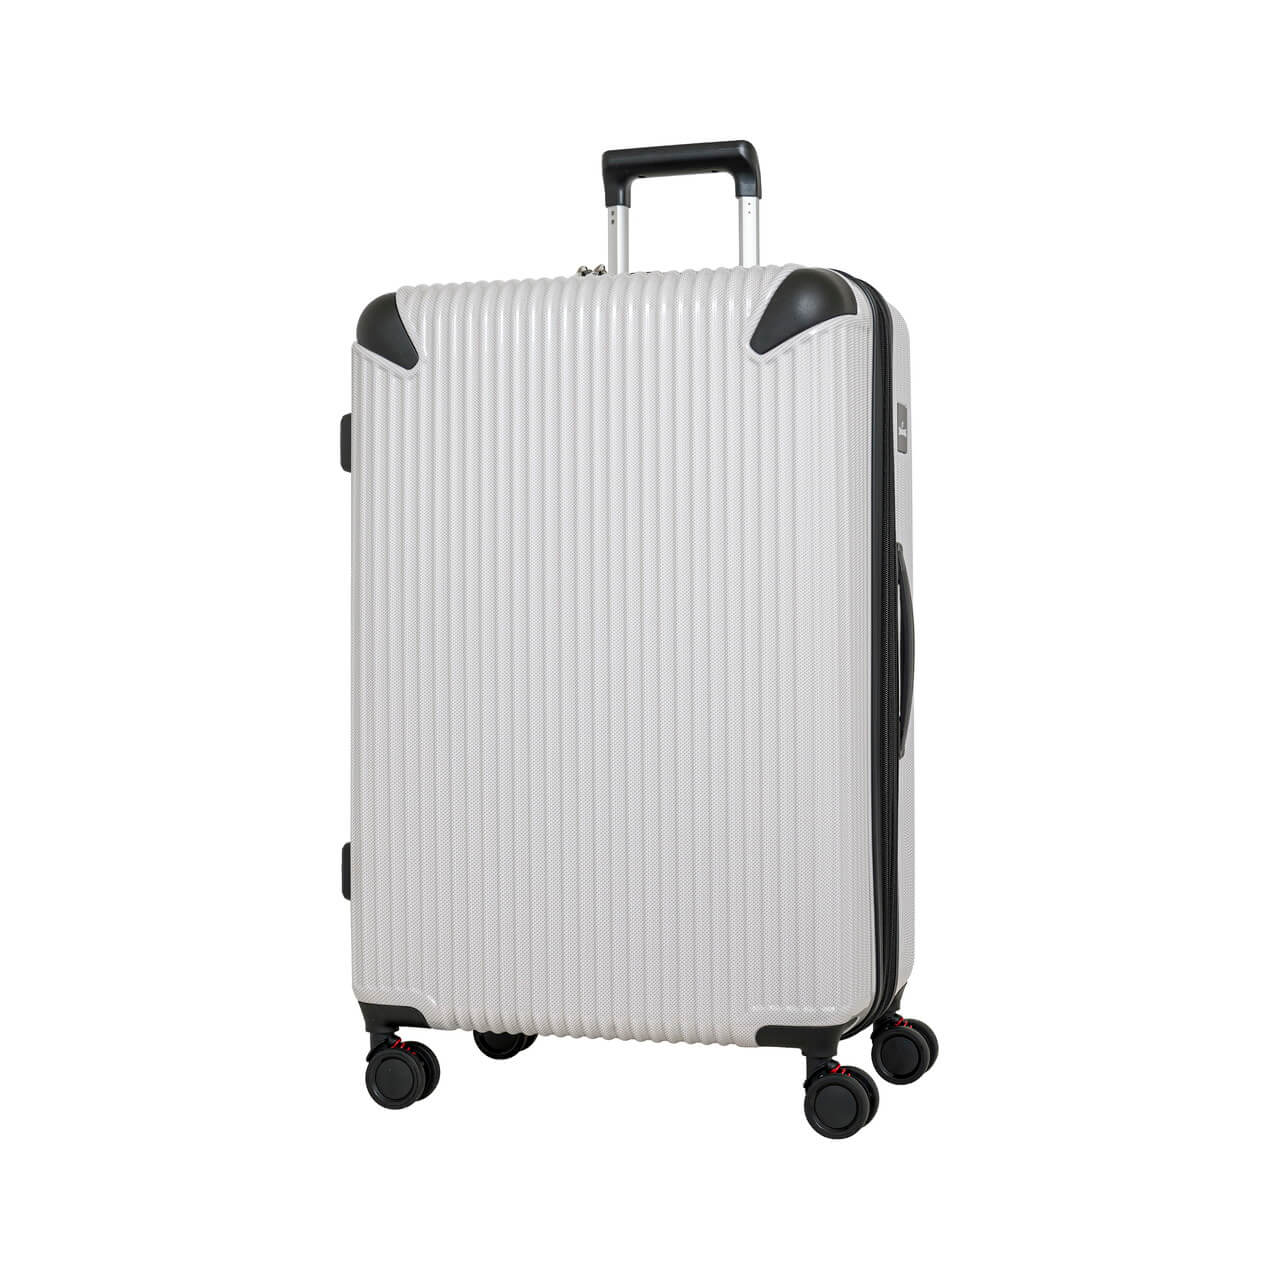 SPALDING スーツケース メンズ 大容量 ll 超大型 98L レディース 静音 拡張 キャリーケース スポルディング SP-0836-68  30代 40代